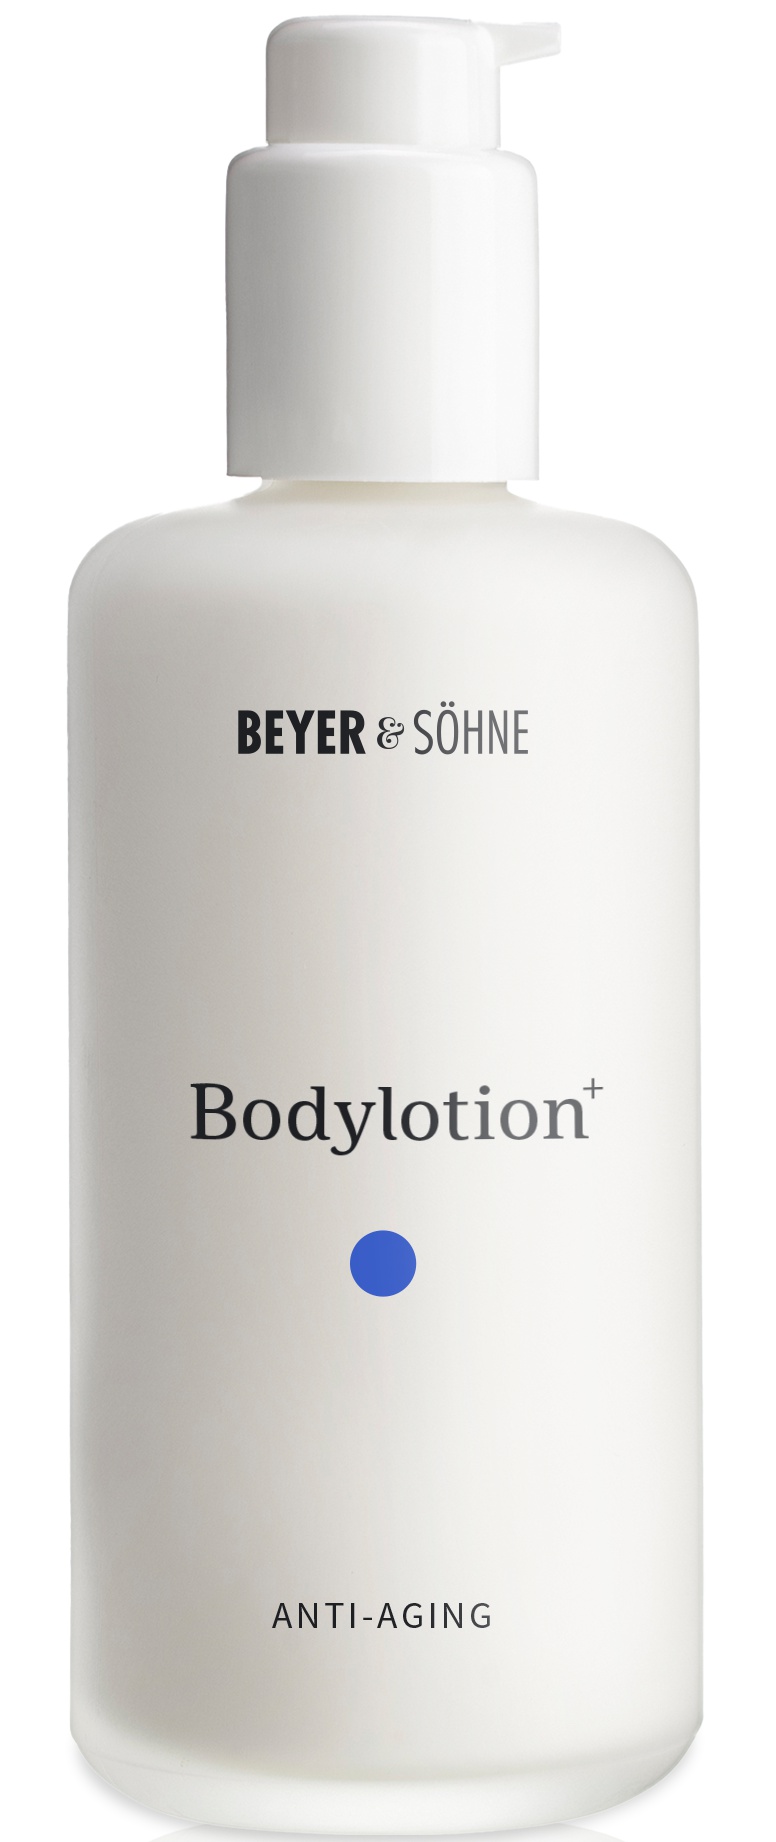 Beyer&Söhne Bodylotion+ Anti-aging